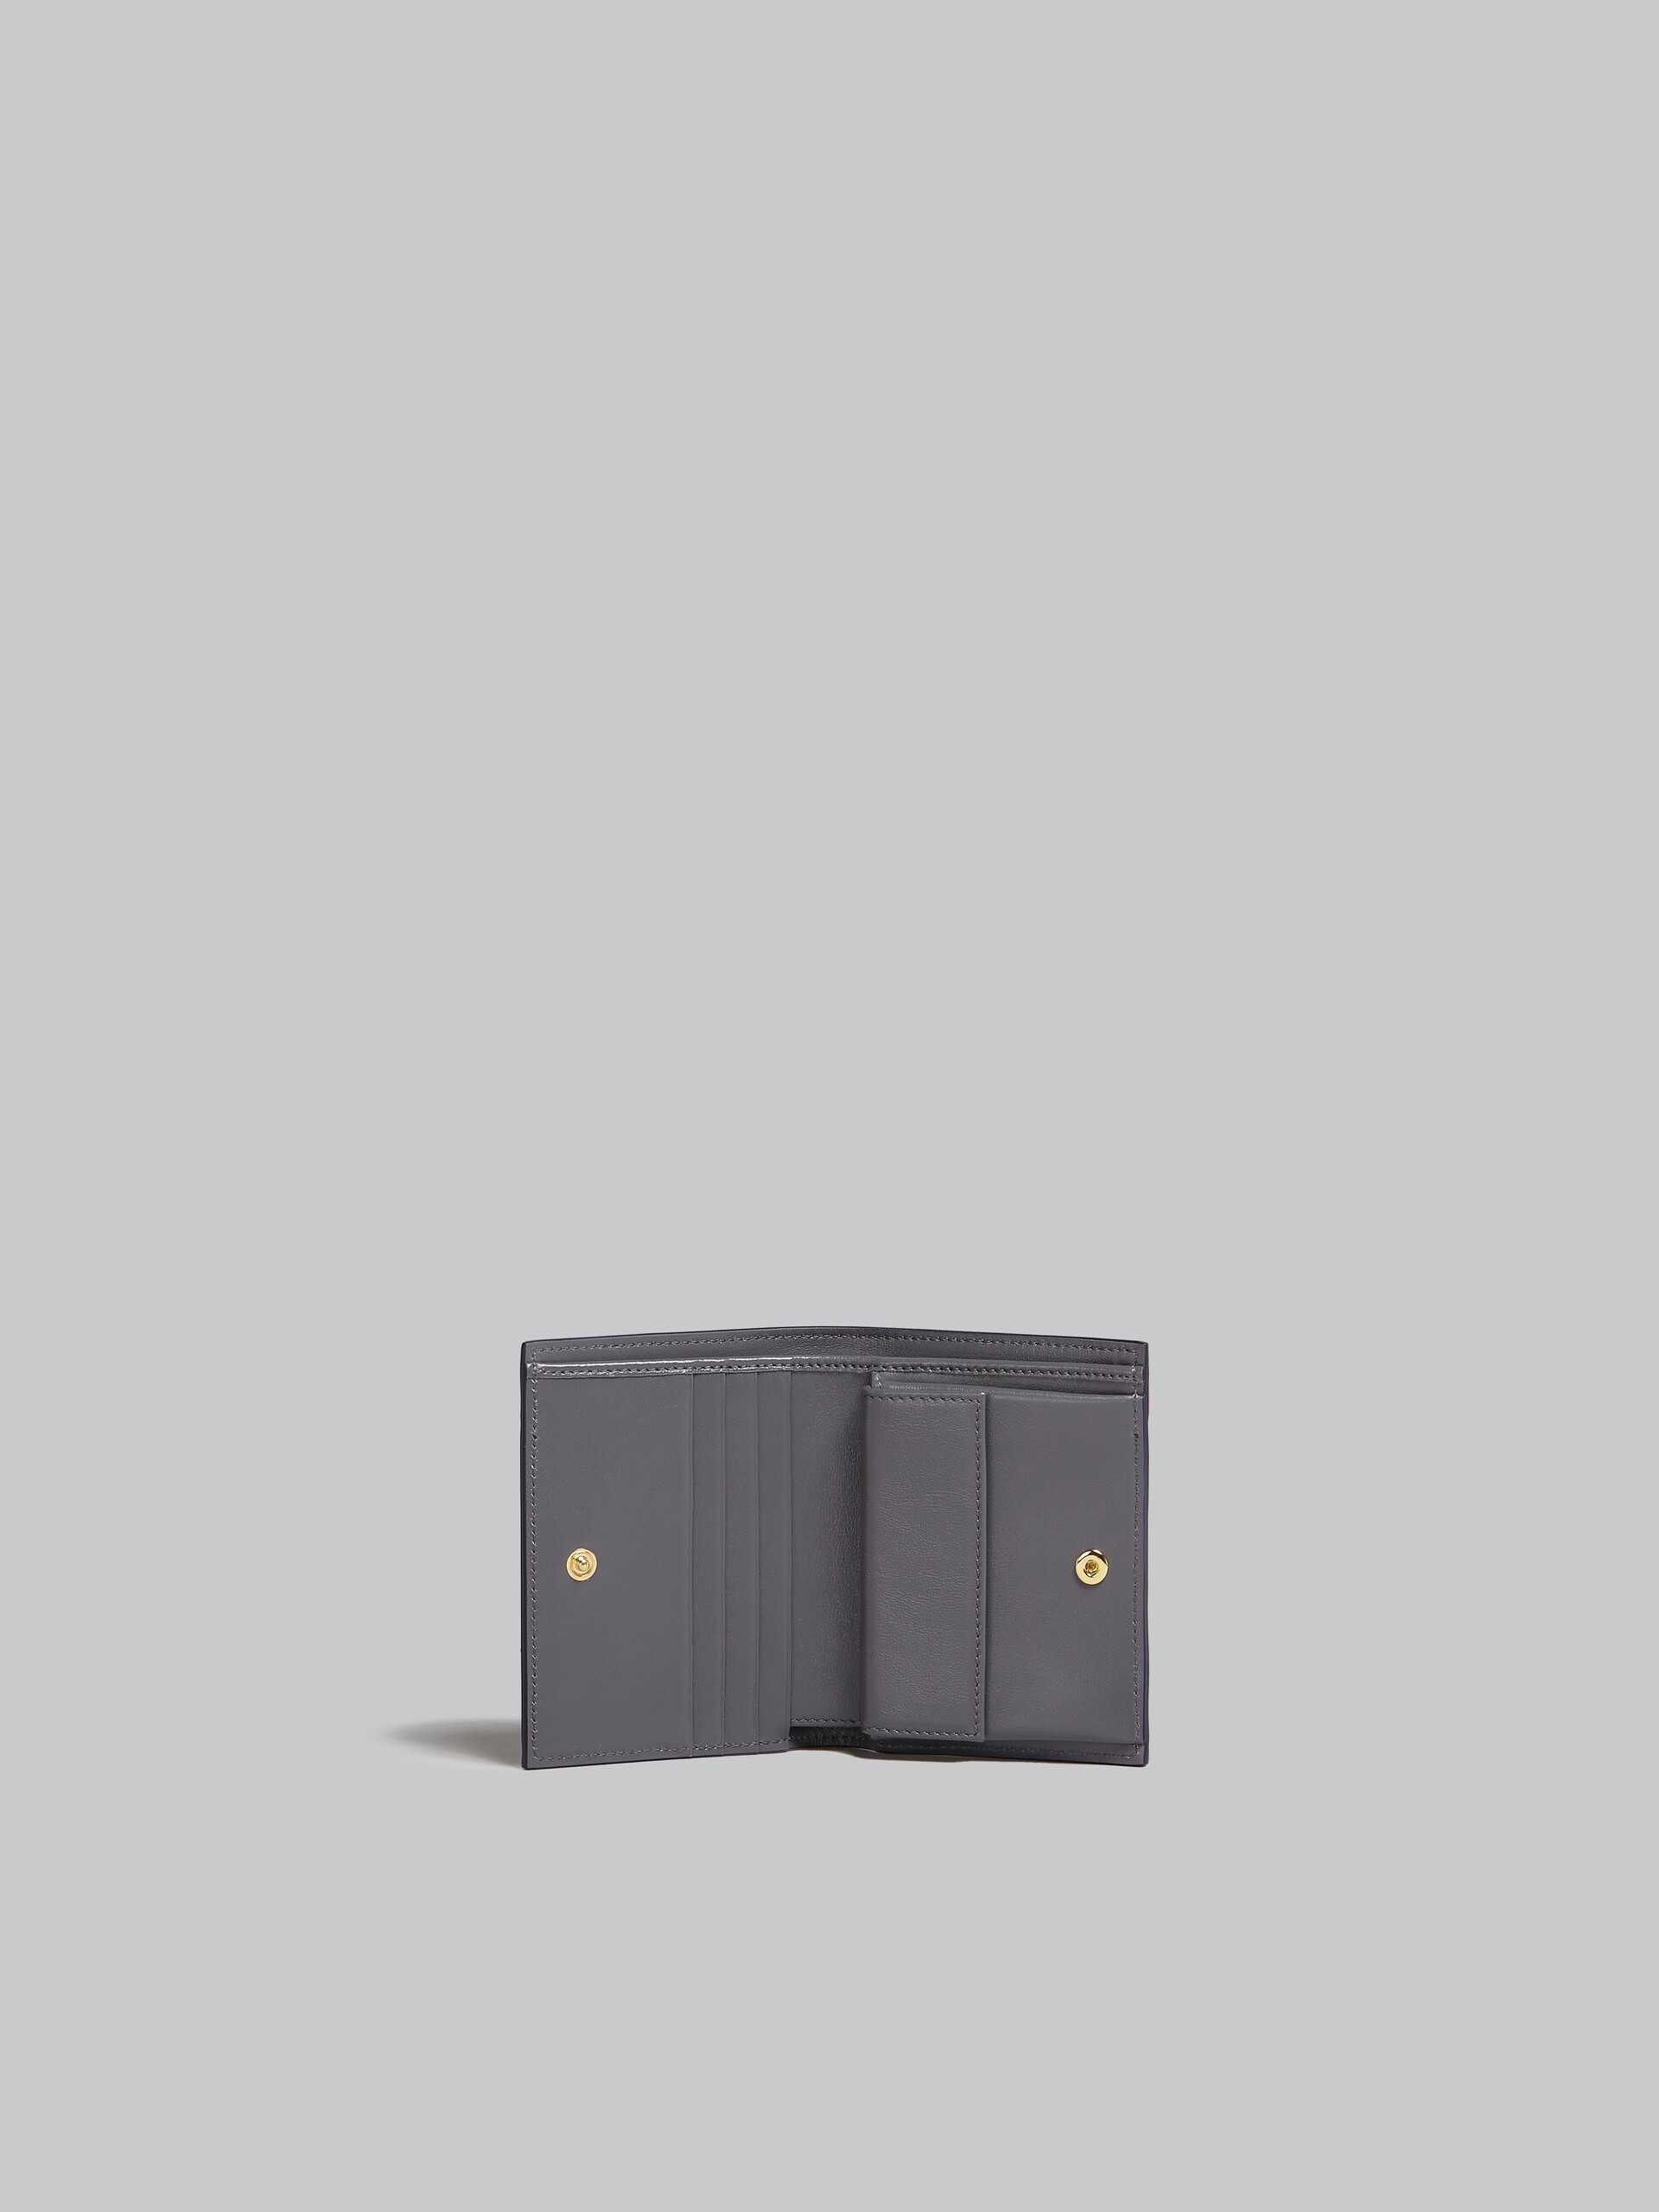 Grey and black leather bi-fold wallet - Wallets - Image 2